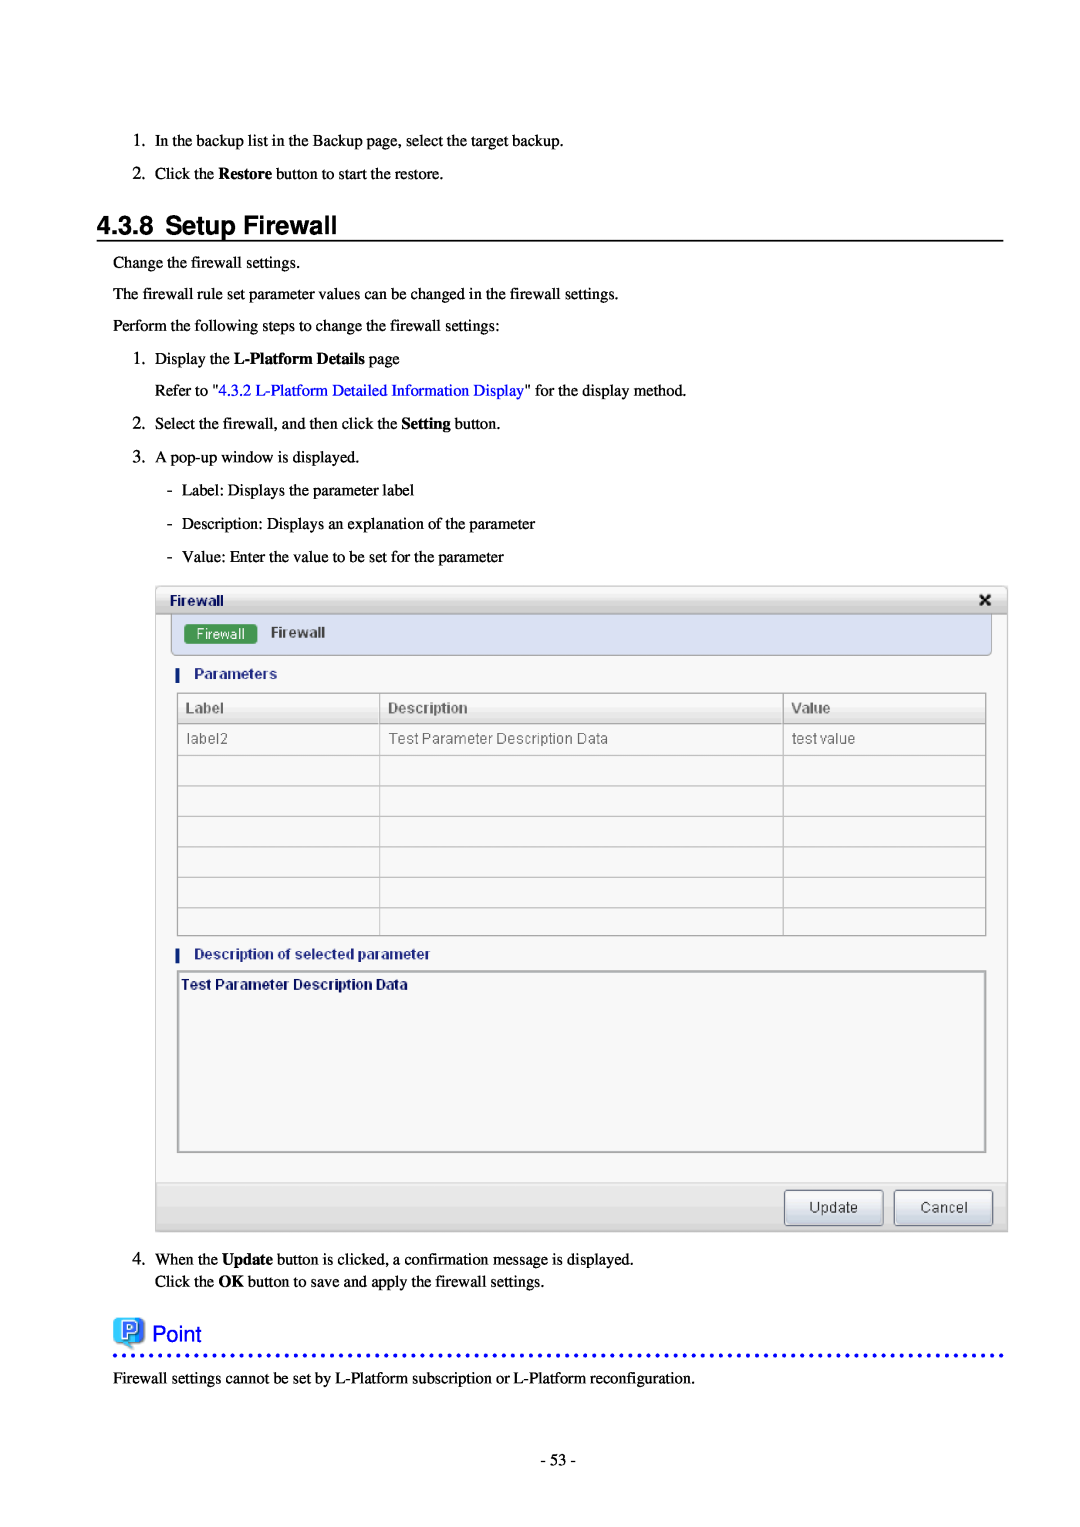 Fujitsu V3.0.0 manual Setup Firewall, Point, Display the L-Platform Details page 